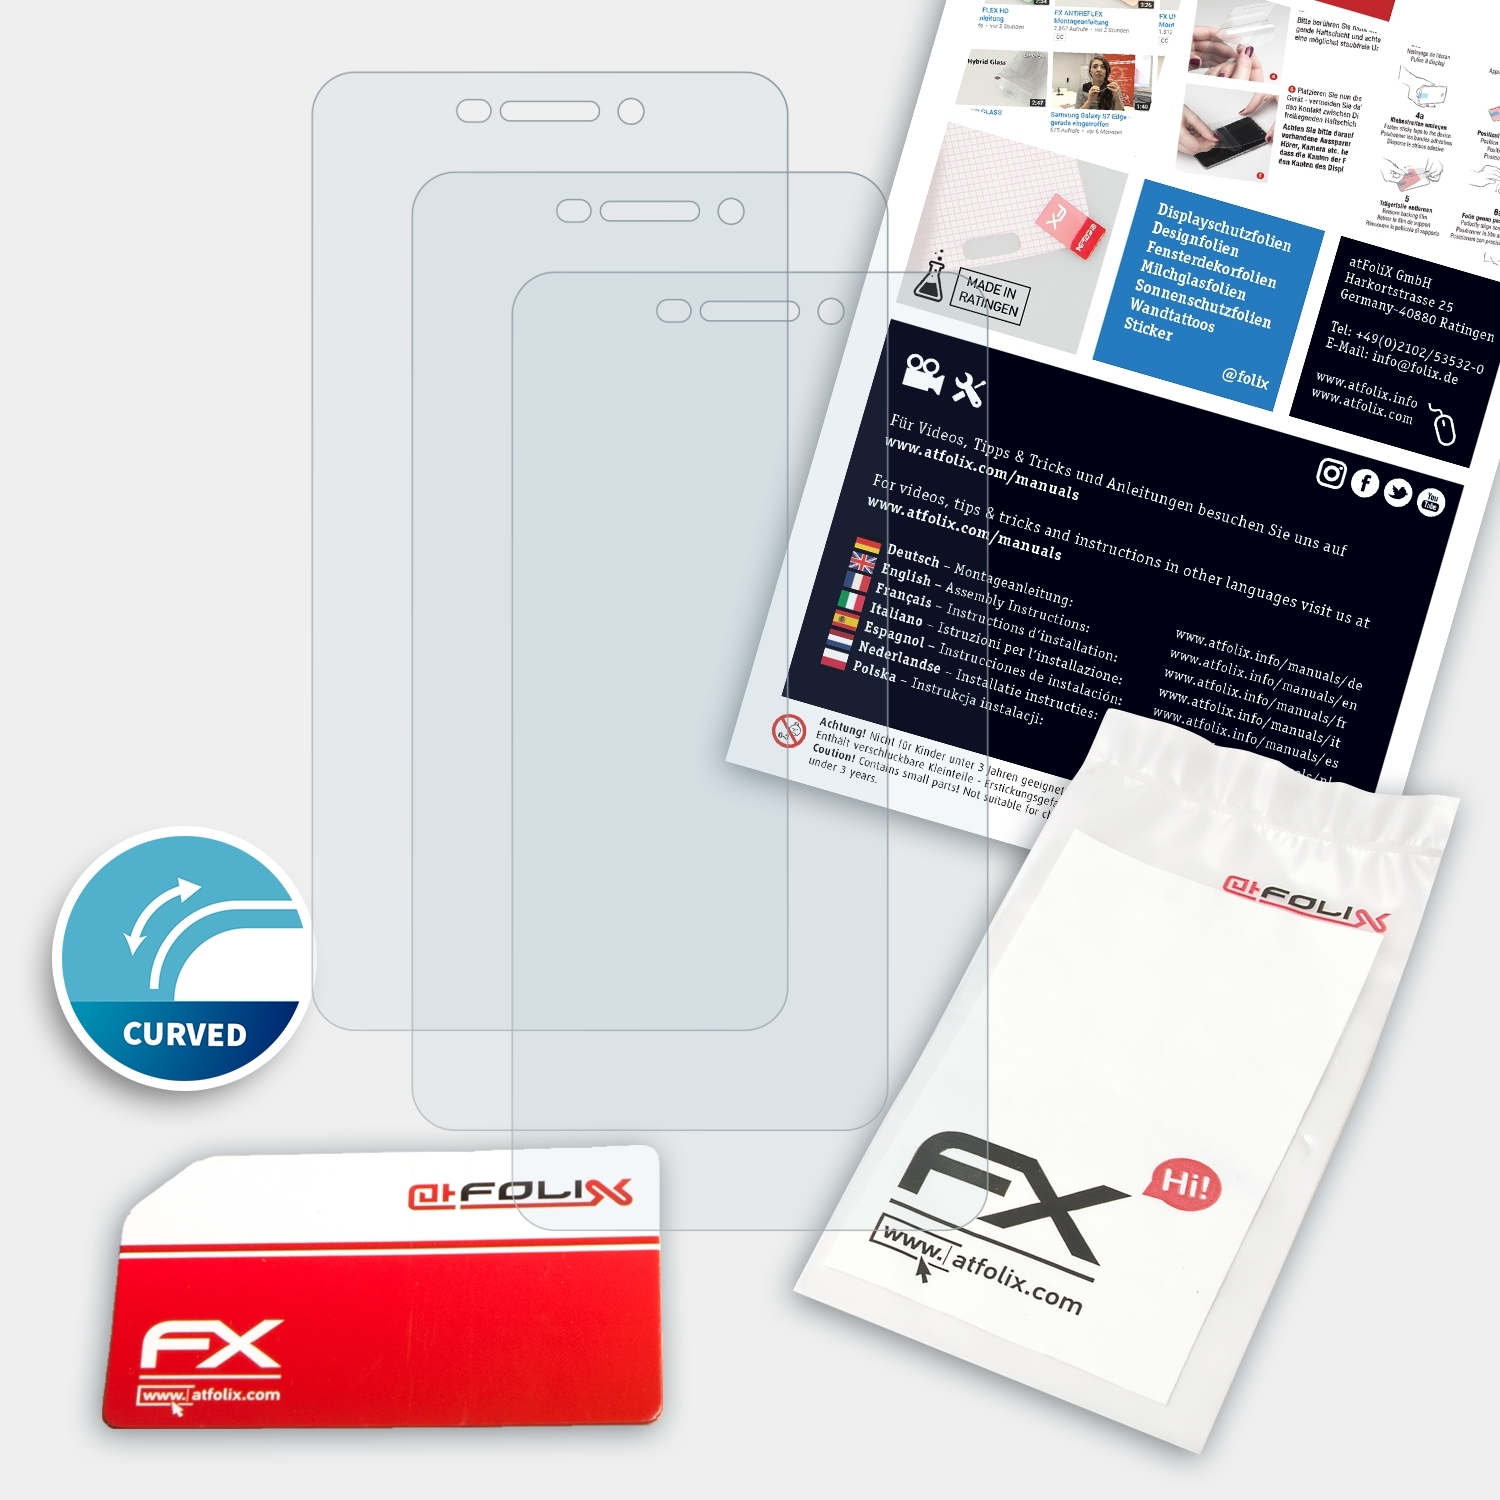 Displayschutz(für Nokia 6 3x ATFOLIX (2018)) FX-ActiFleX